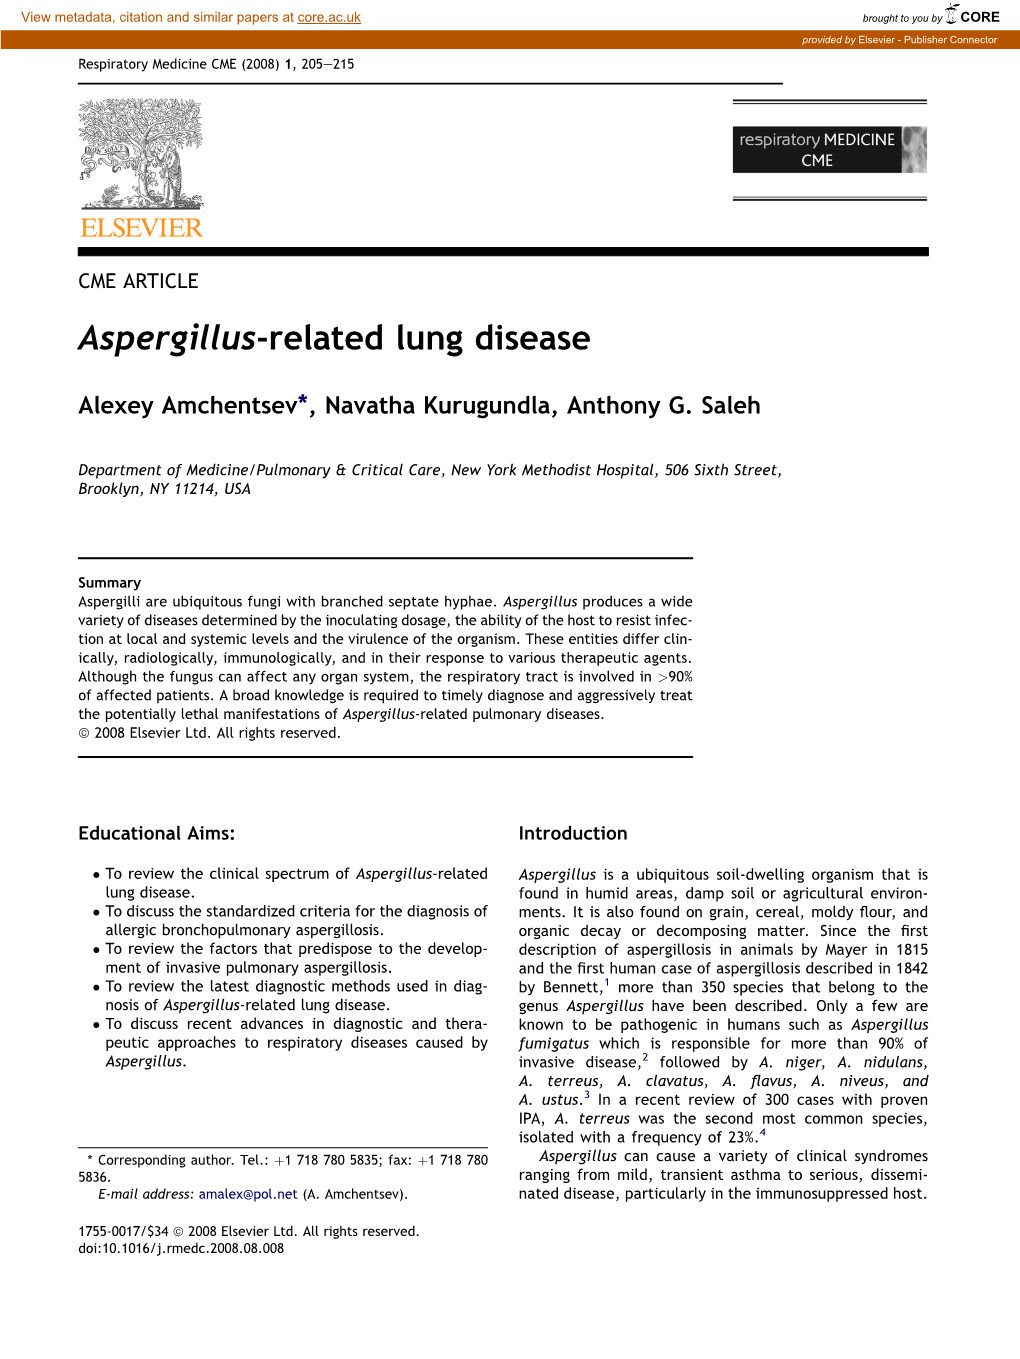 Aspergillus-Related Lung Disease